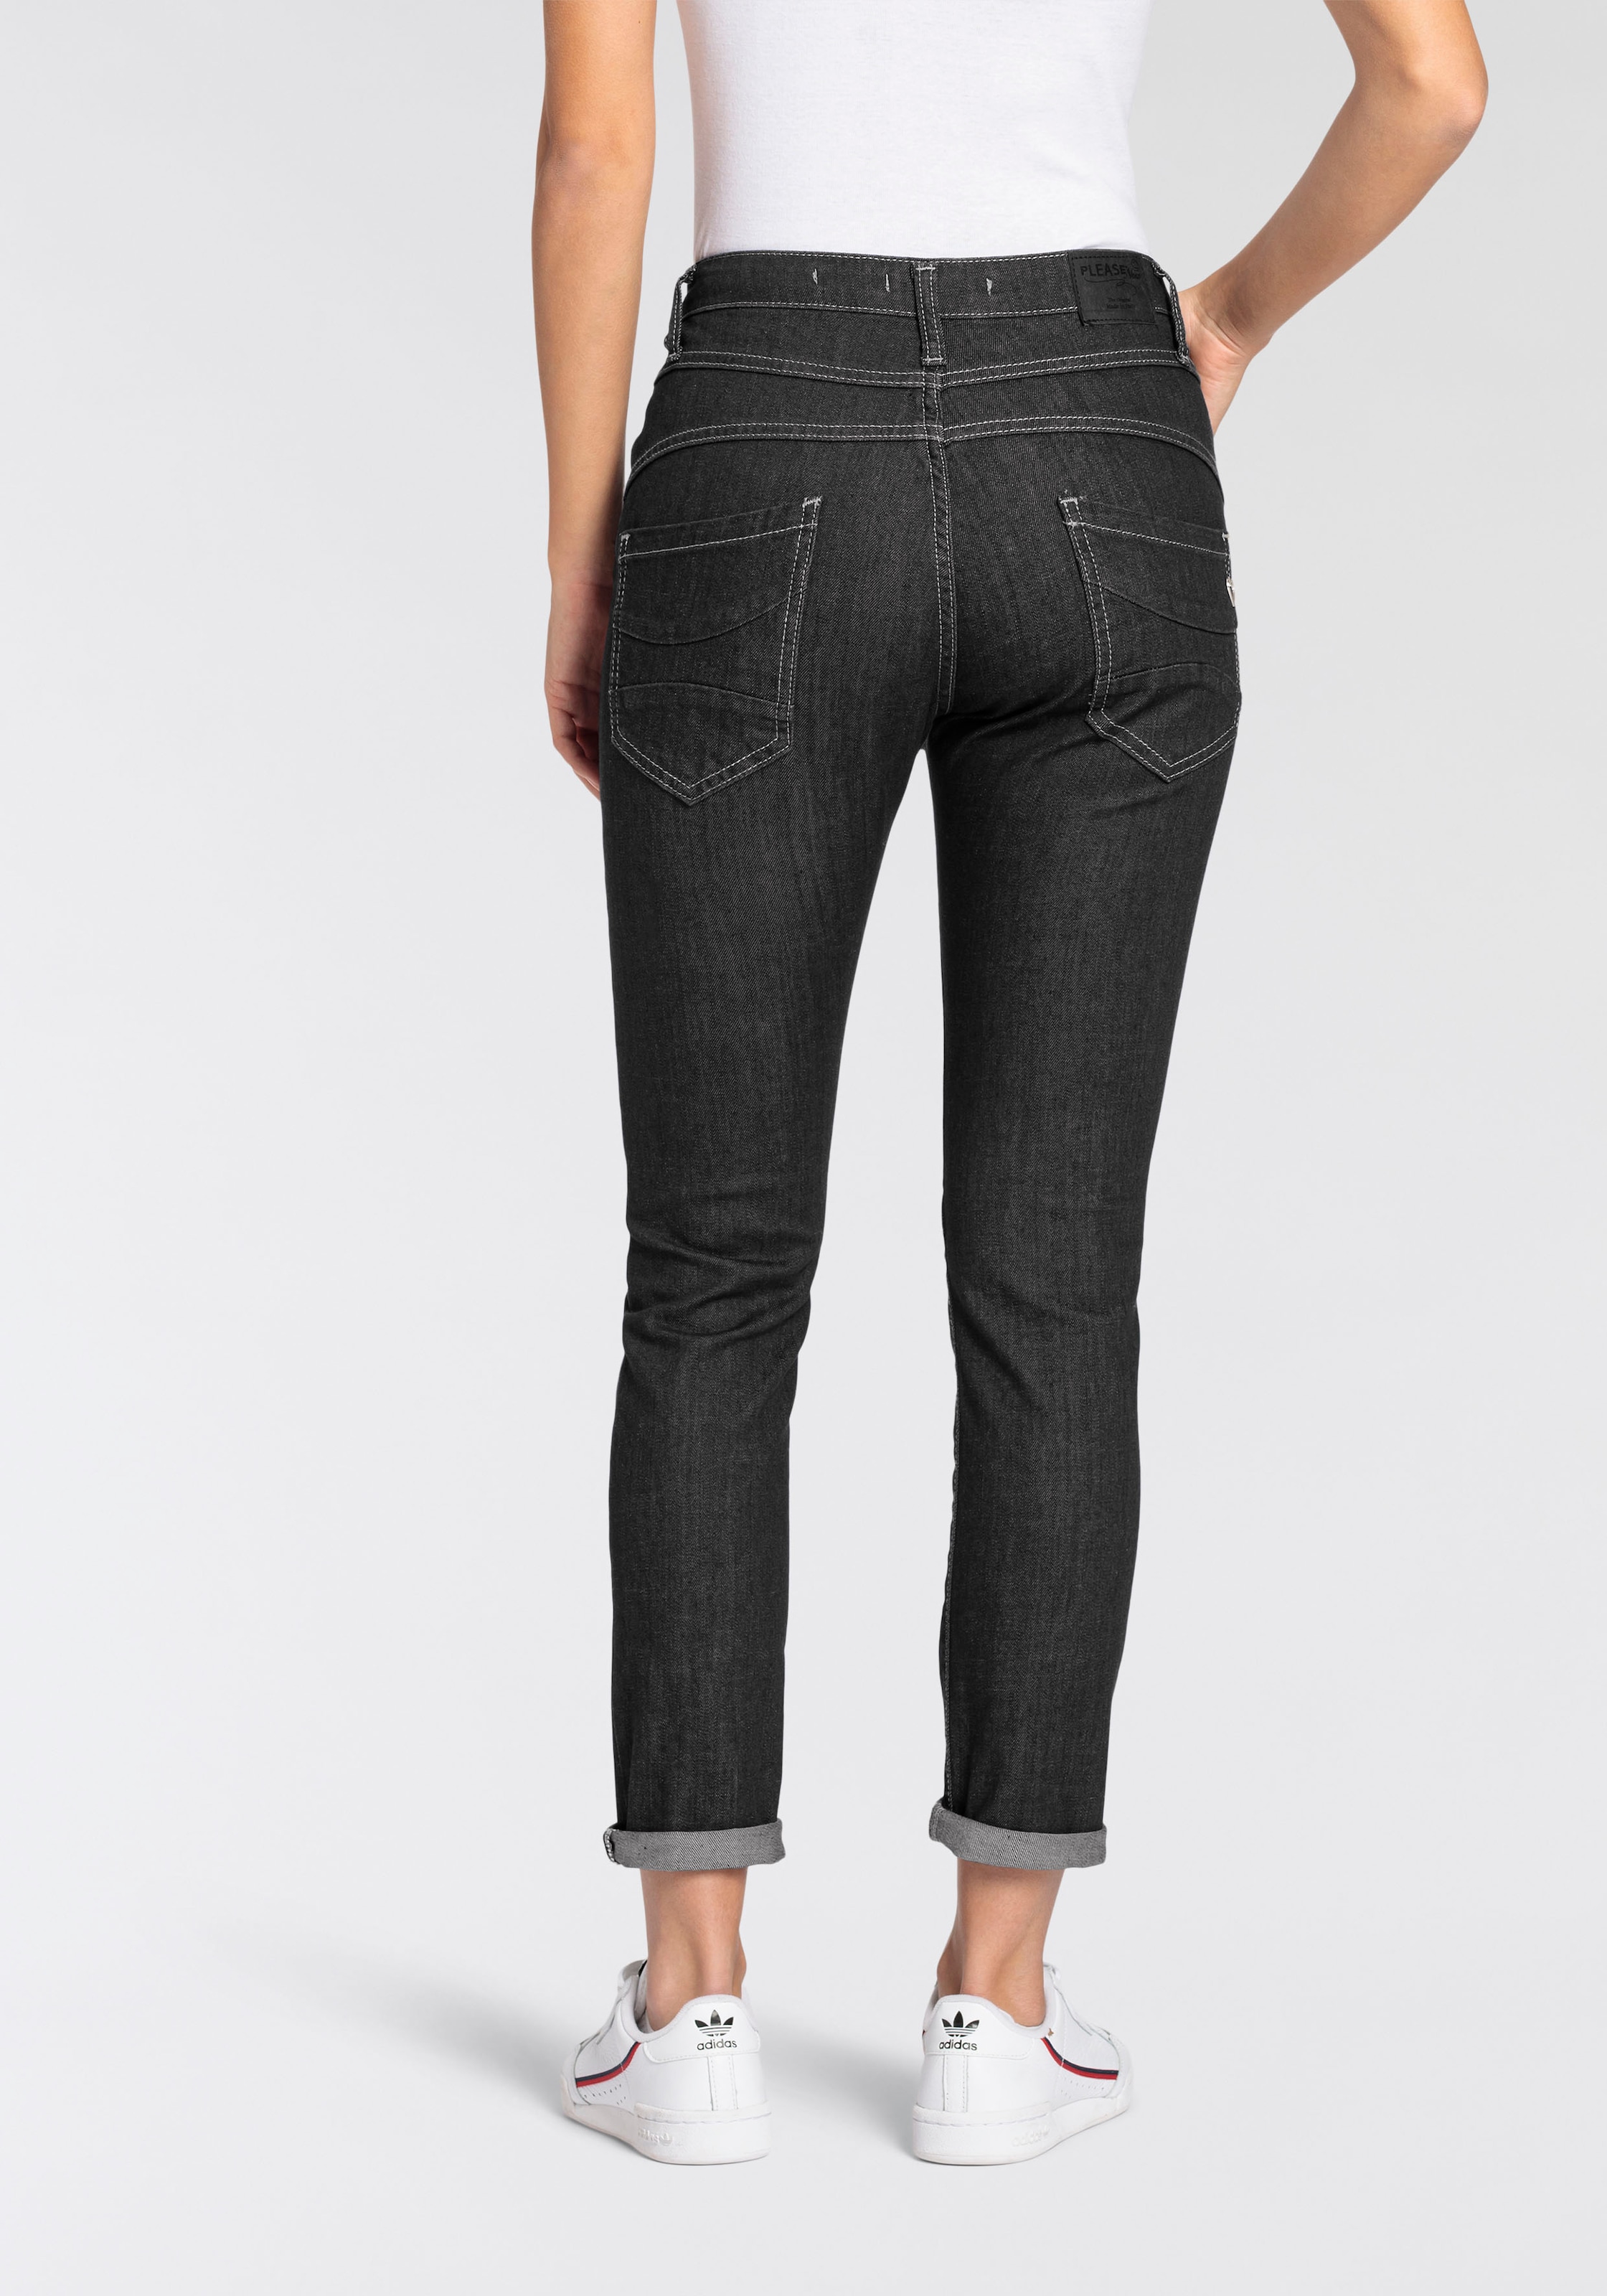 Please Jeans 5-Pocket-Jeans, Sichtbare Knopfleiste